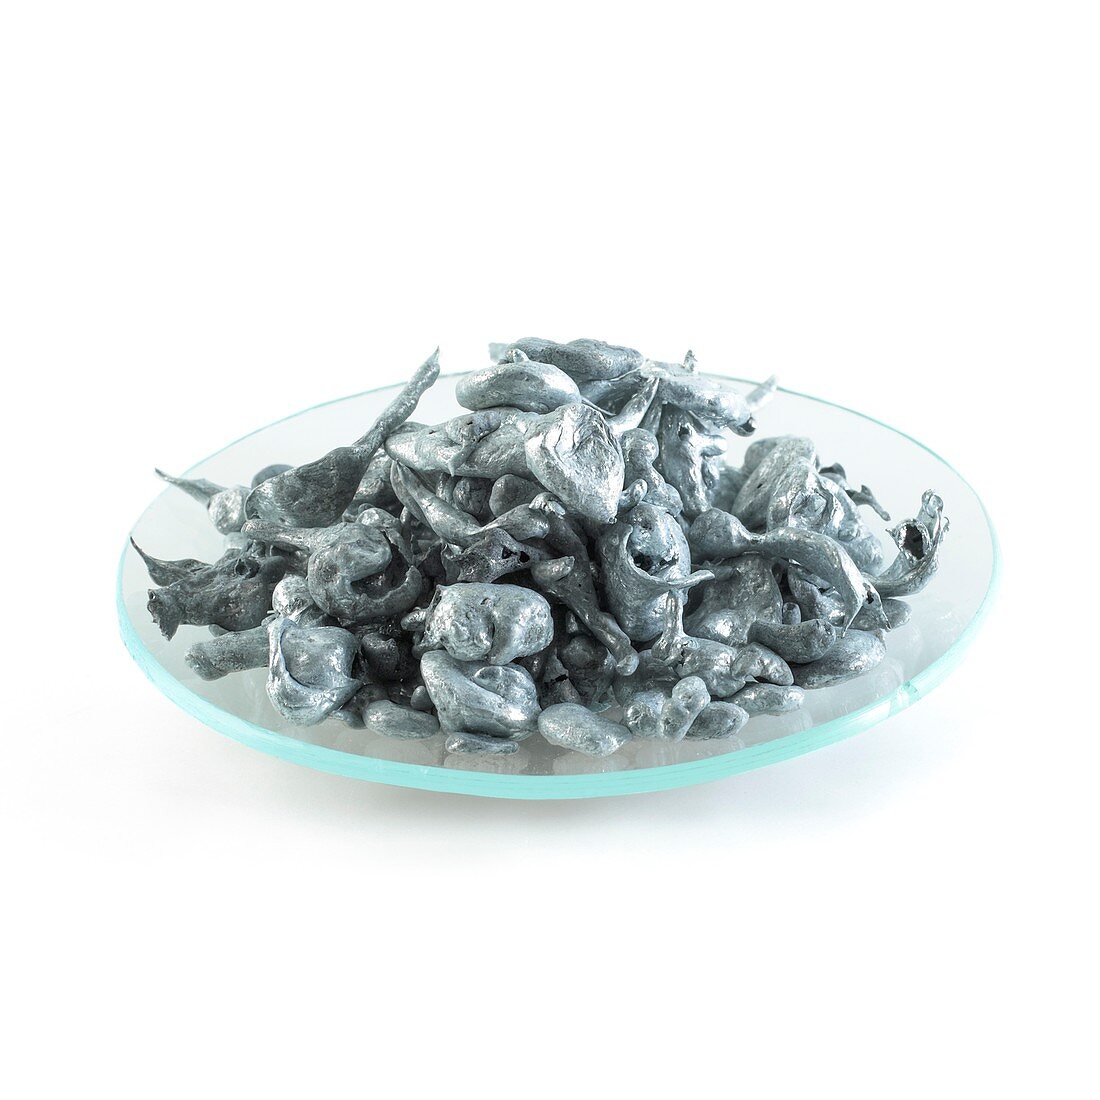 Pile of zinc granules